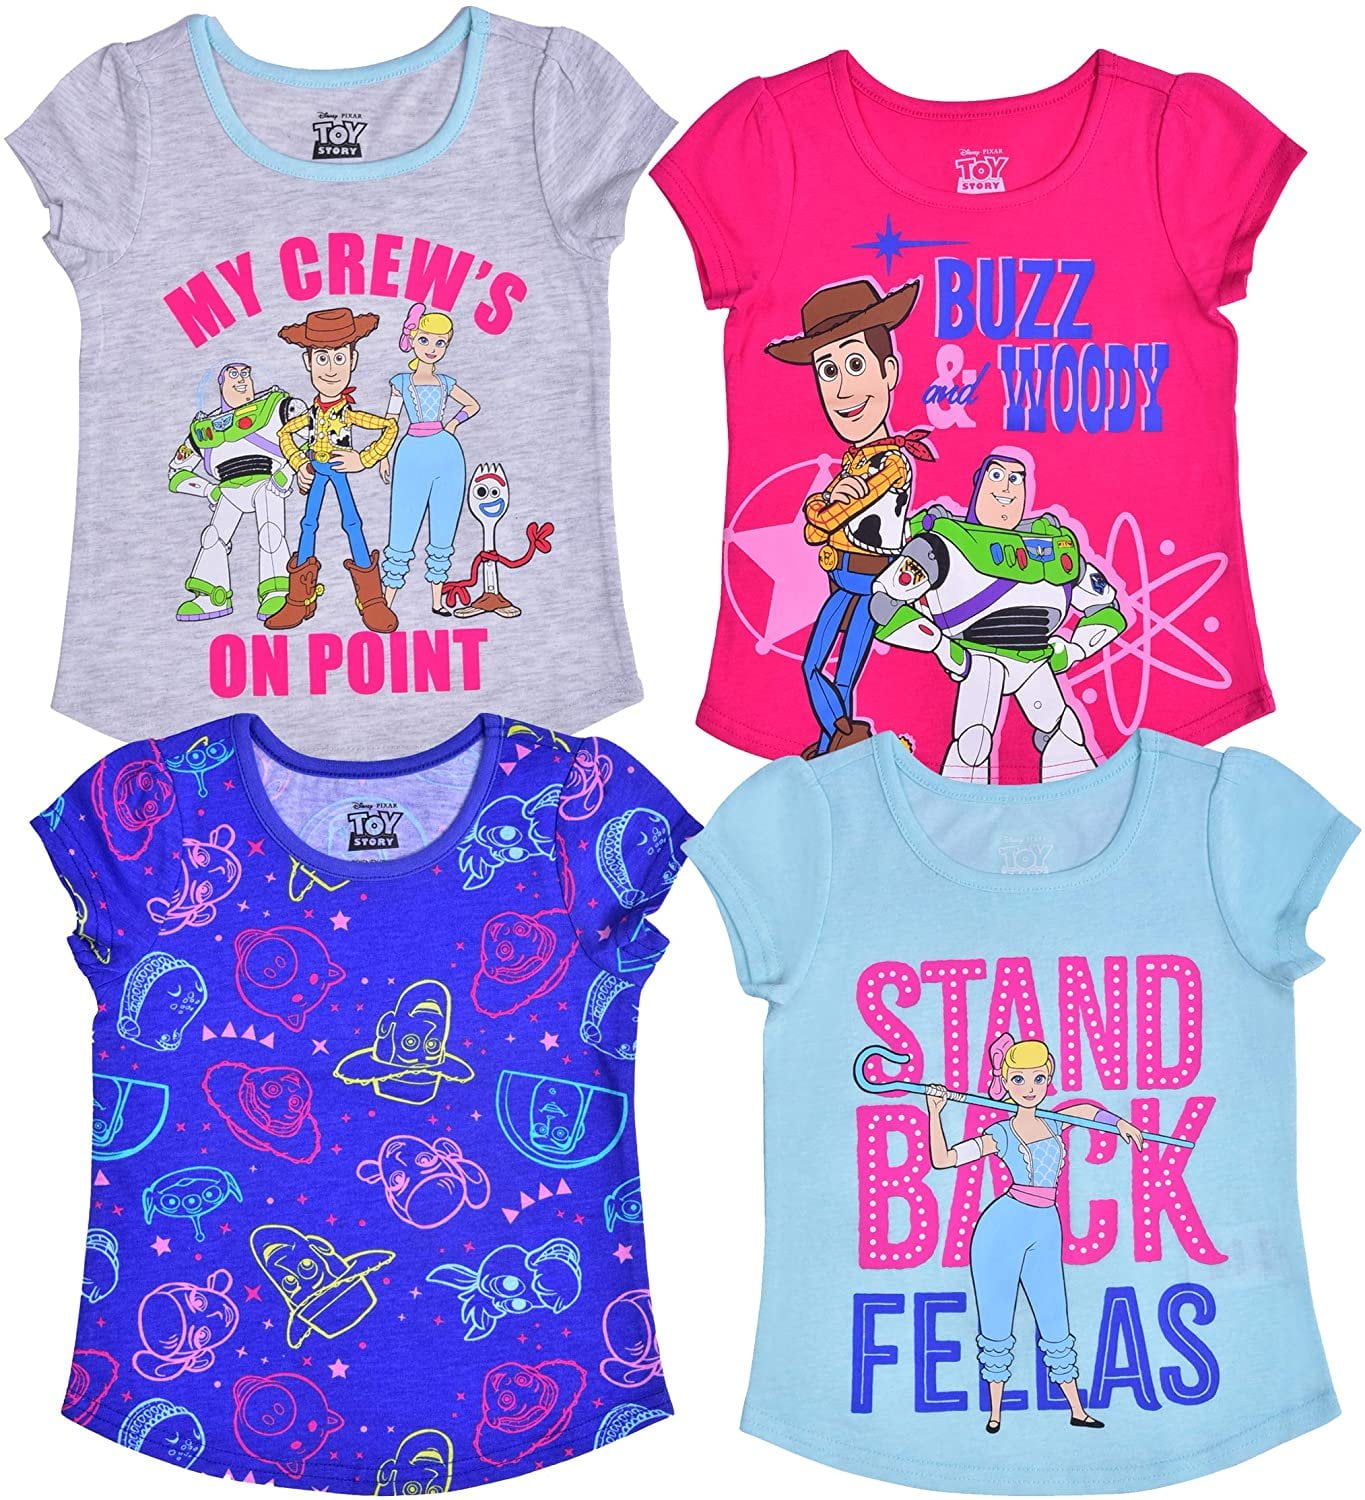 Disney Pixar Toy Story Toddler and Big Girls Sibling Tee Pink T-Shirt Top 2T-6X 